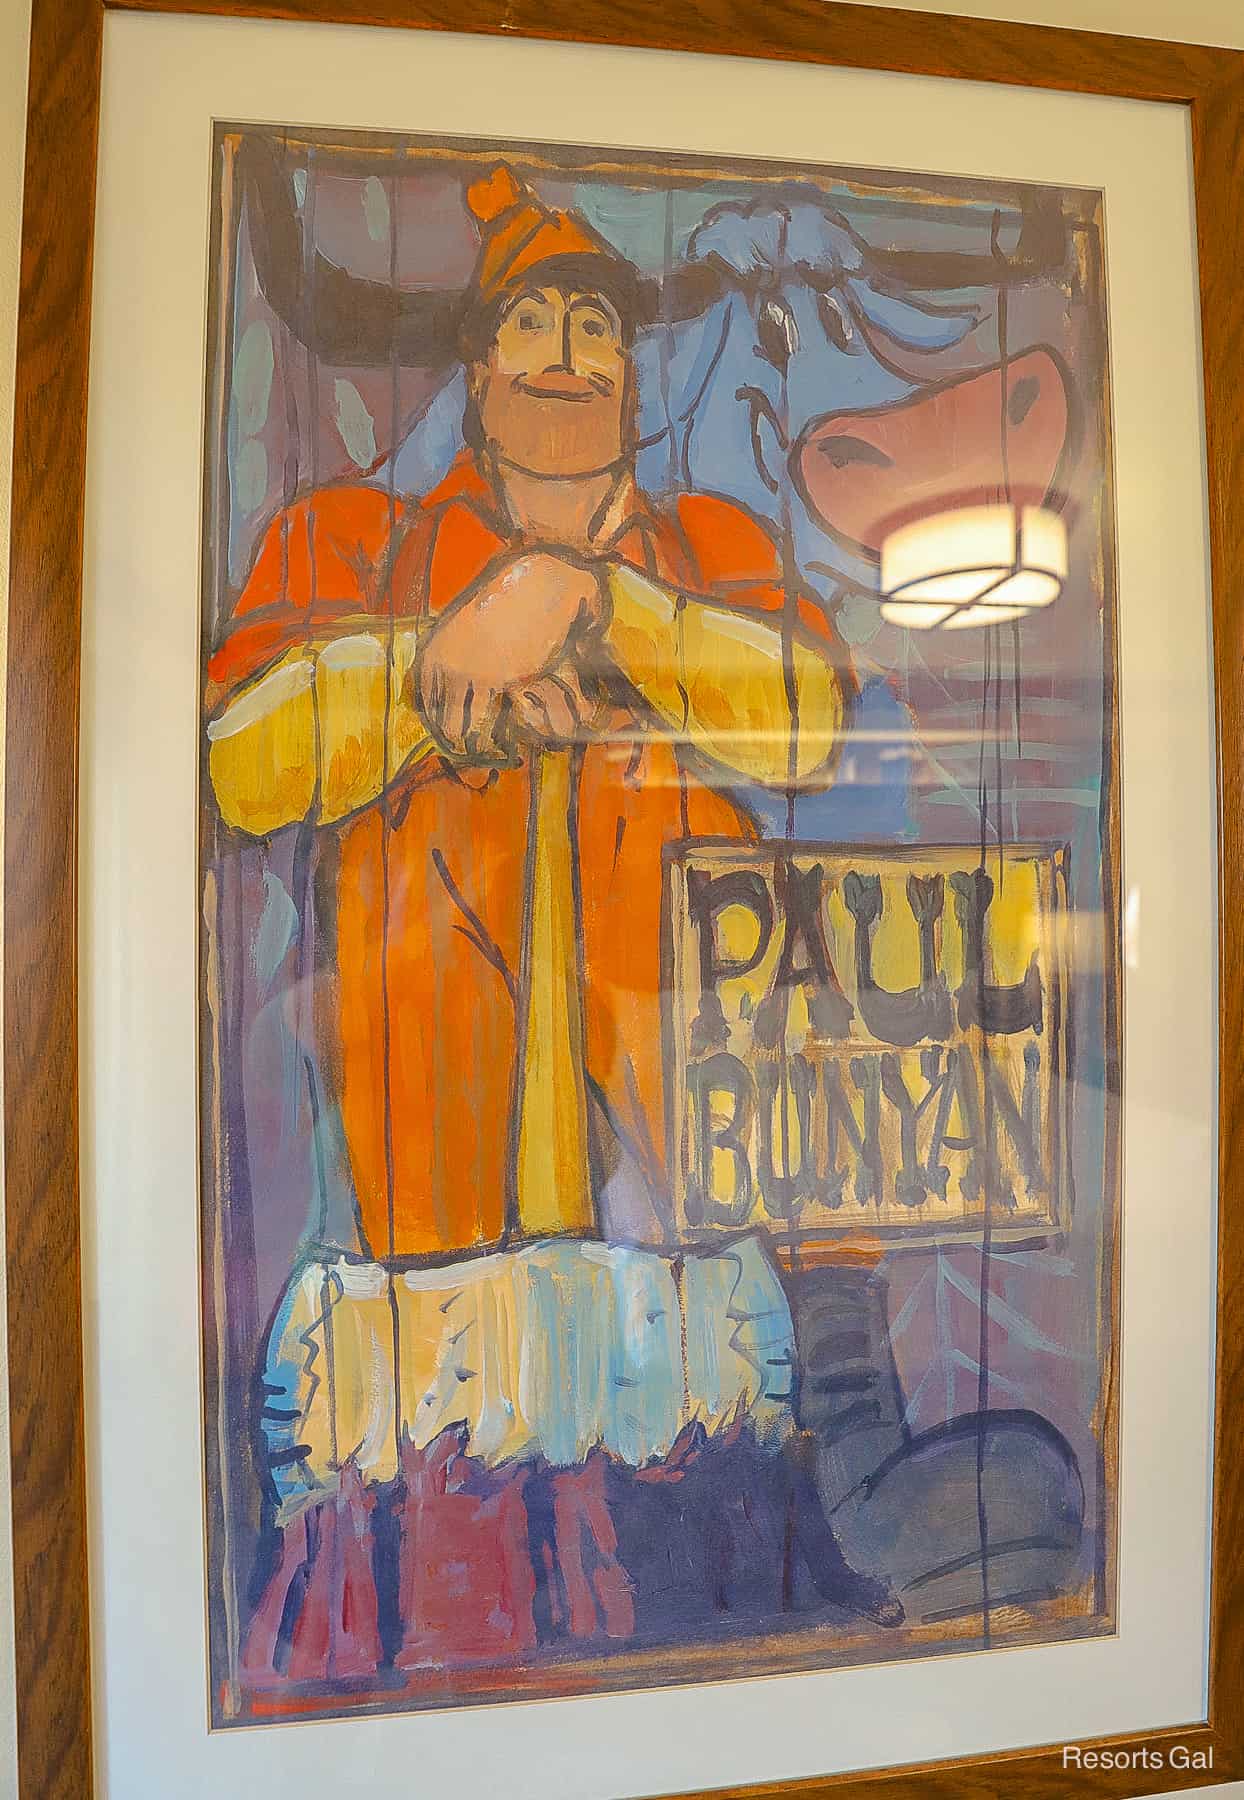 Paul Bunyan artwork in the room at Disney's Wilderness Lodge 